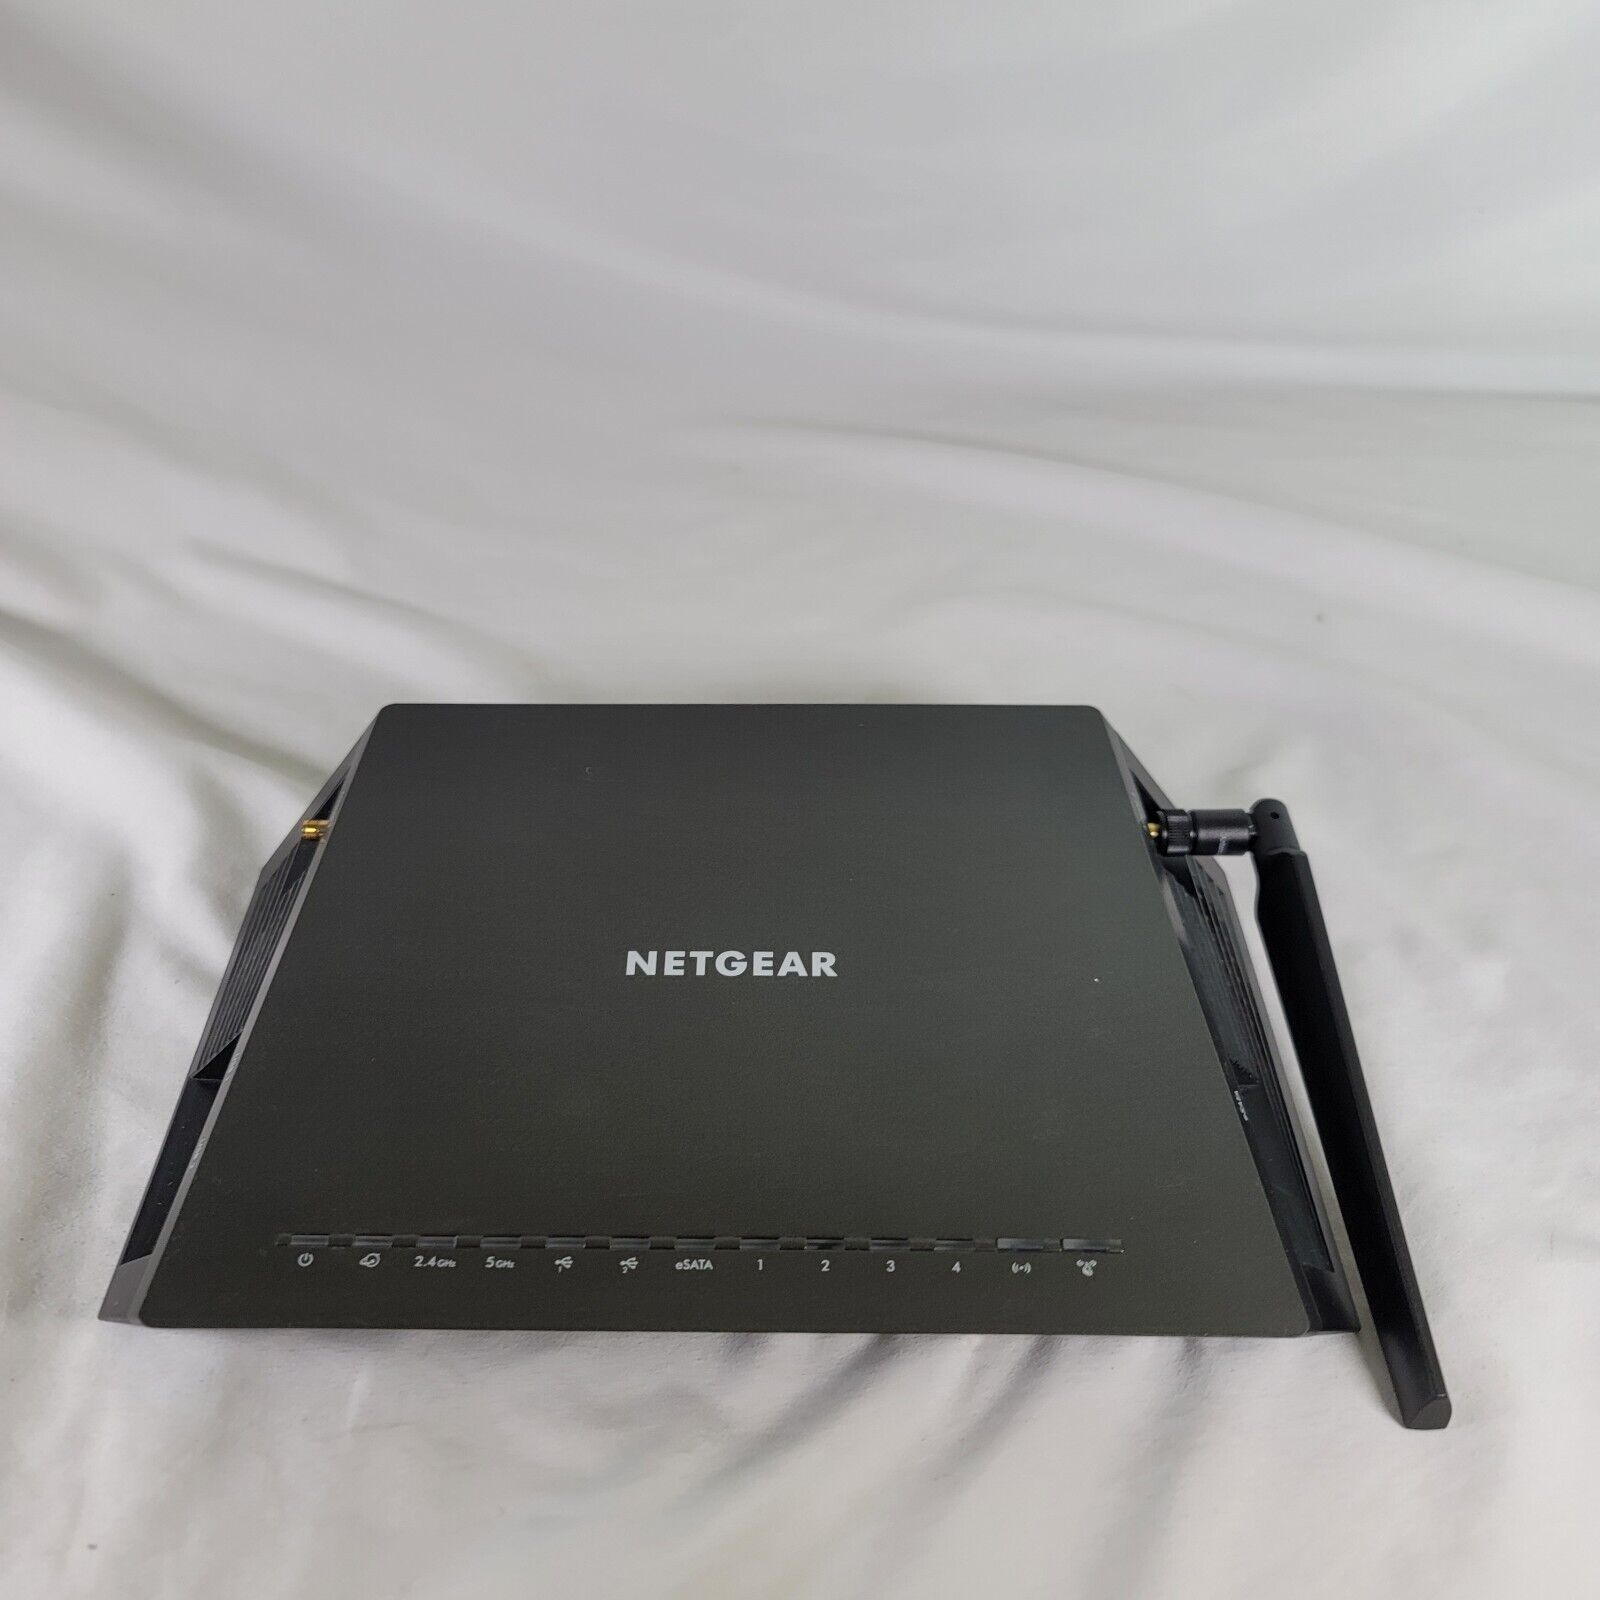 NETGEAR R7800-100NAS Nighthawk 2600 Mbps X4S Smart WiFi Router -No Antennas 